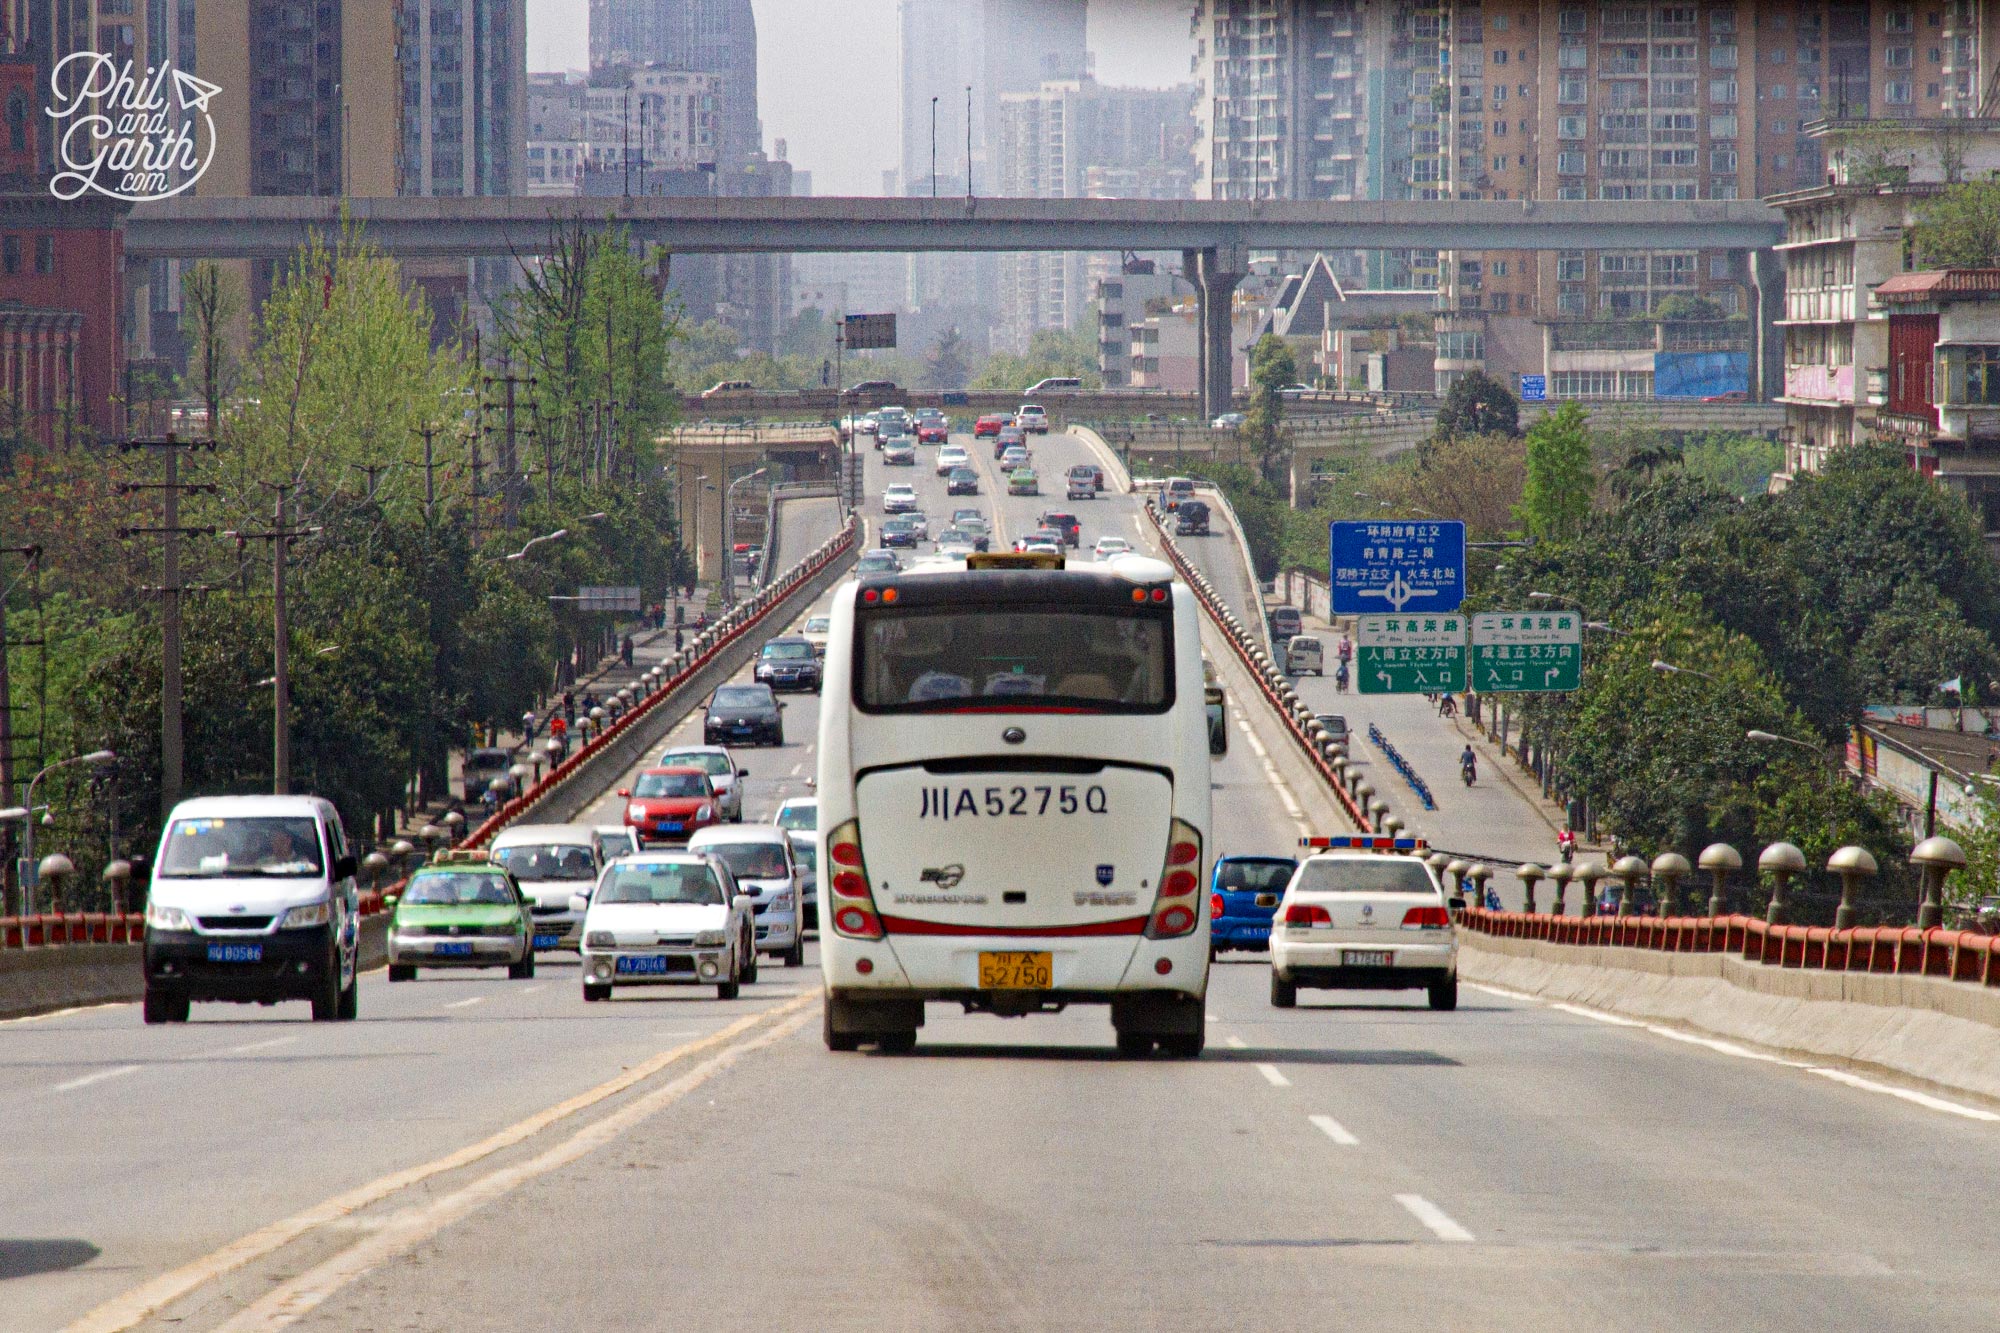 Taking a taxi ride through Chengdu